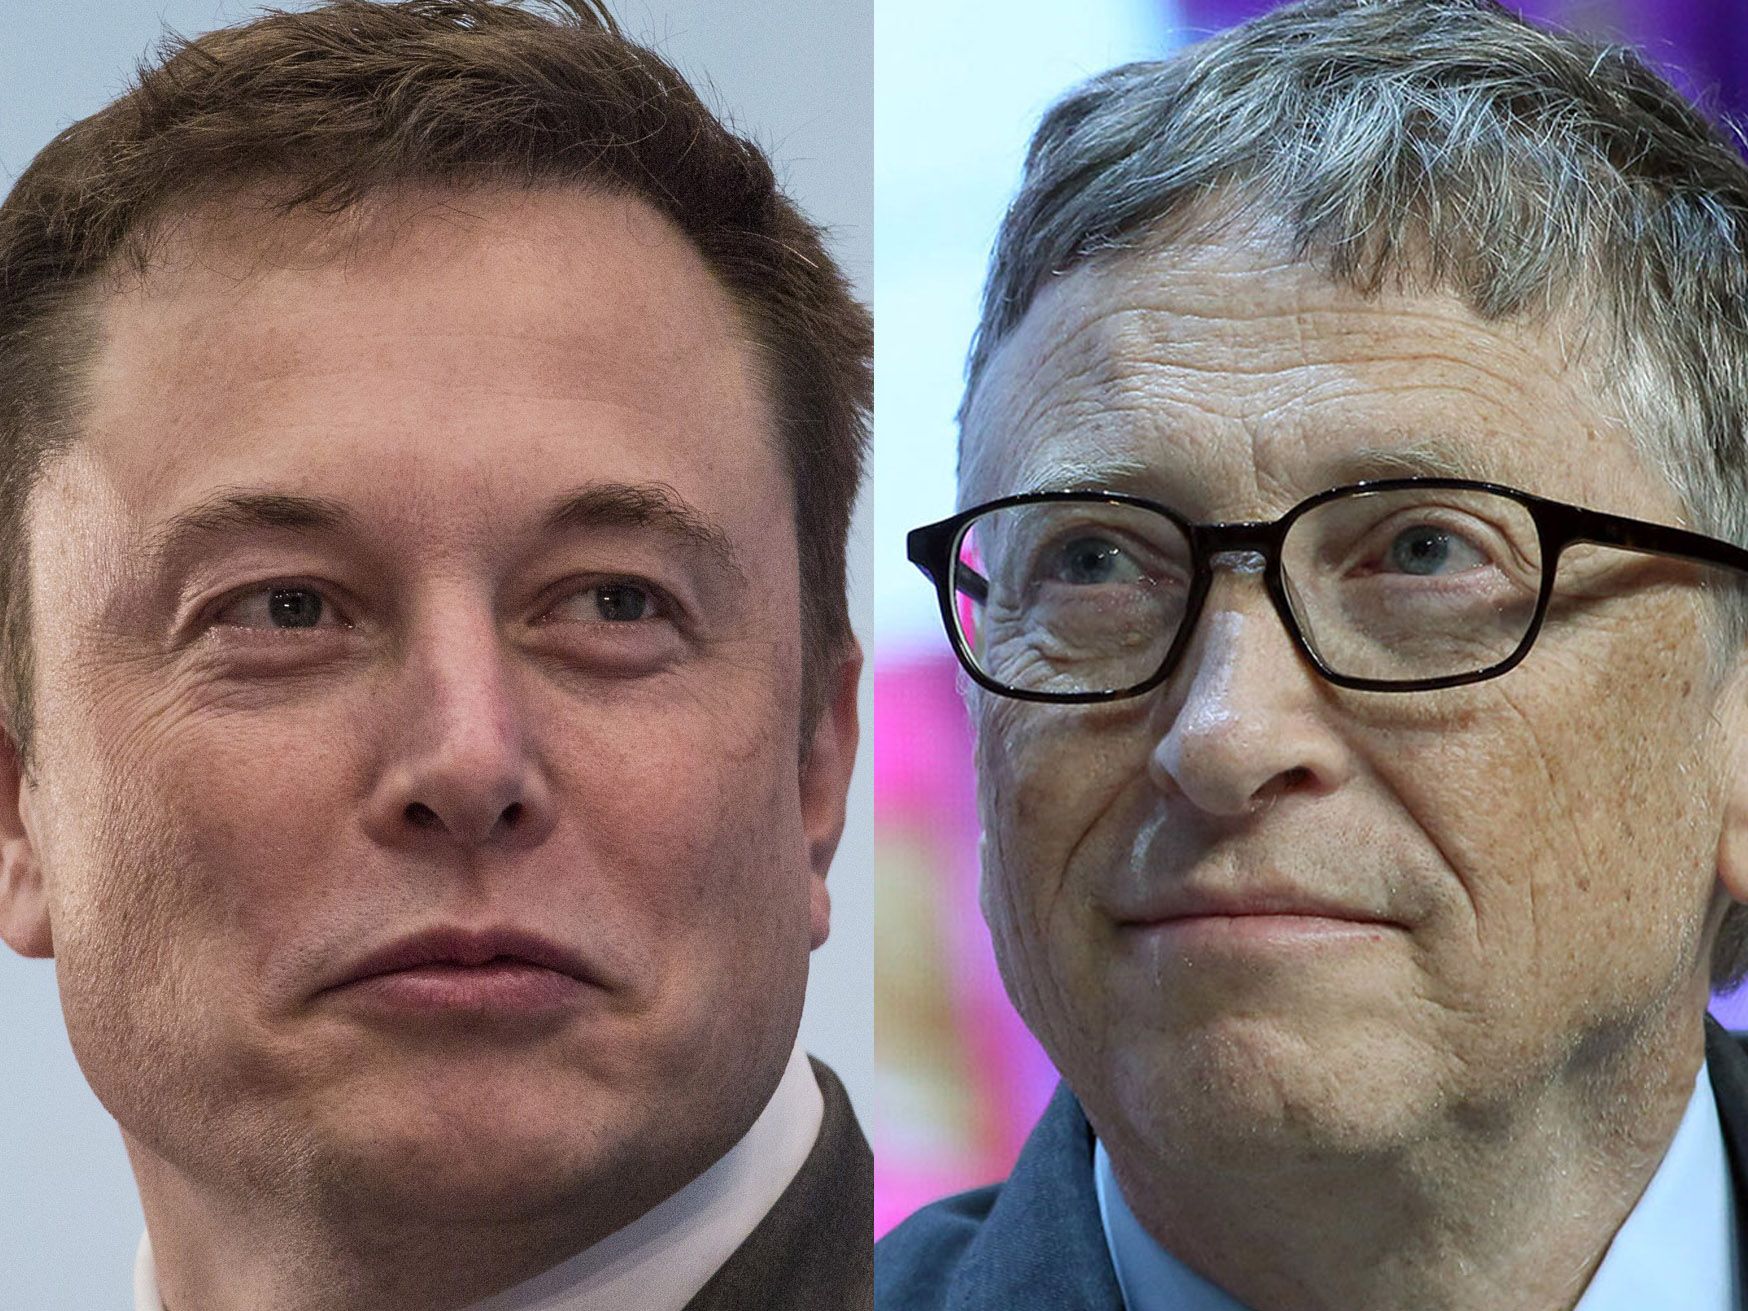 https://www.dailymaverick.co.za/wp-content/uploads/Bill-Gates-and-Elon-Musk.jpg